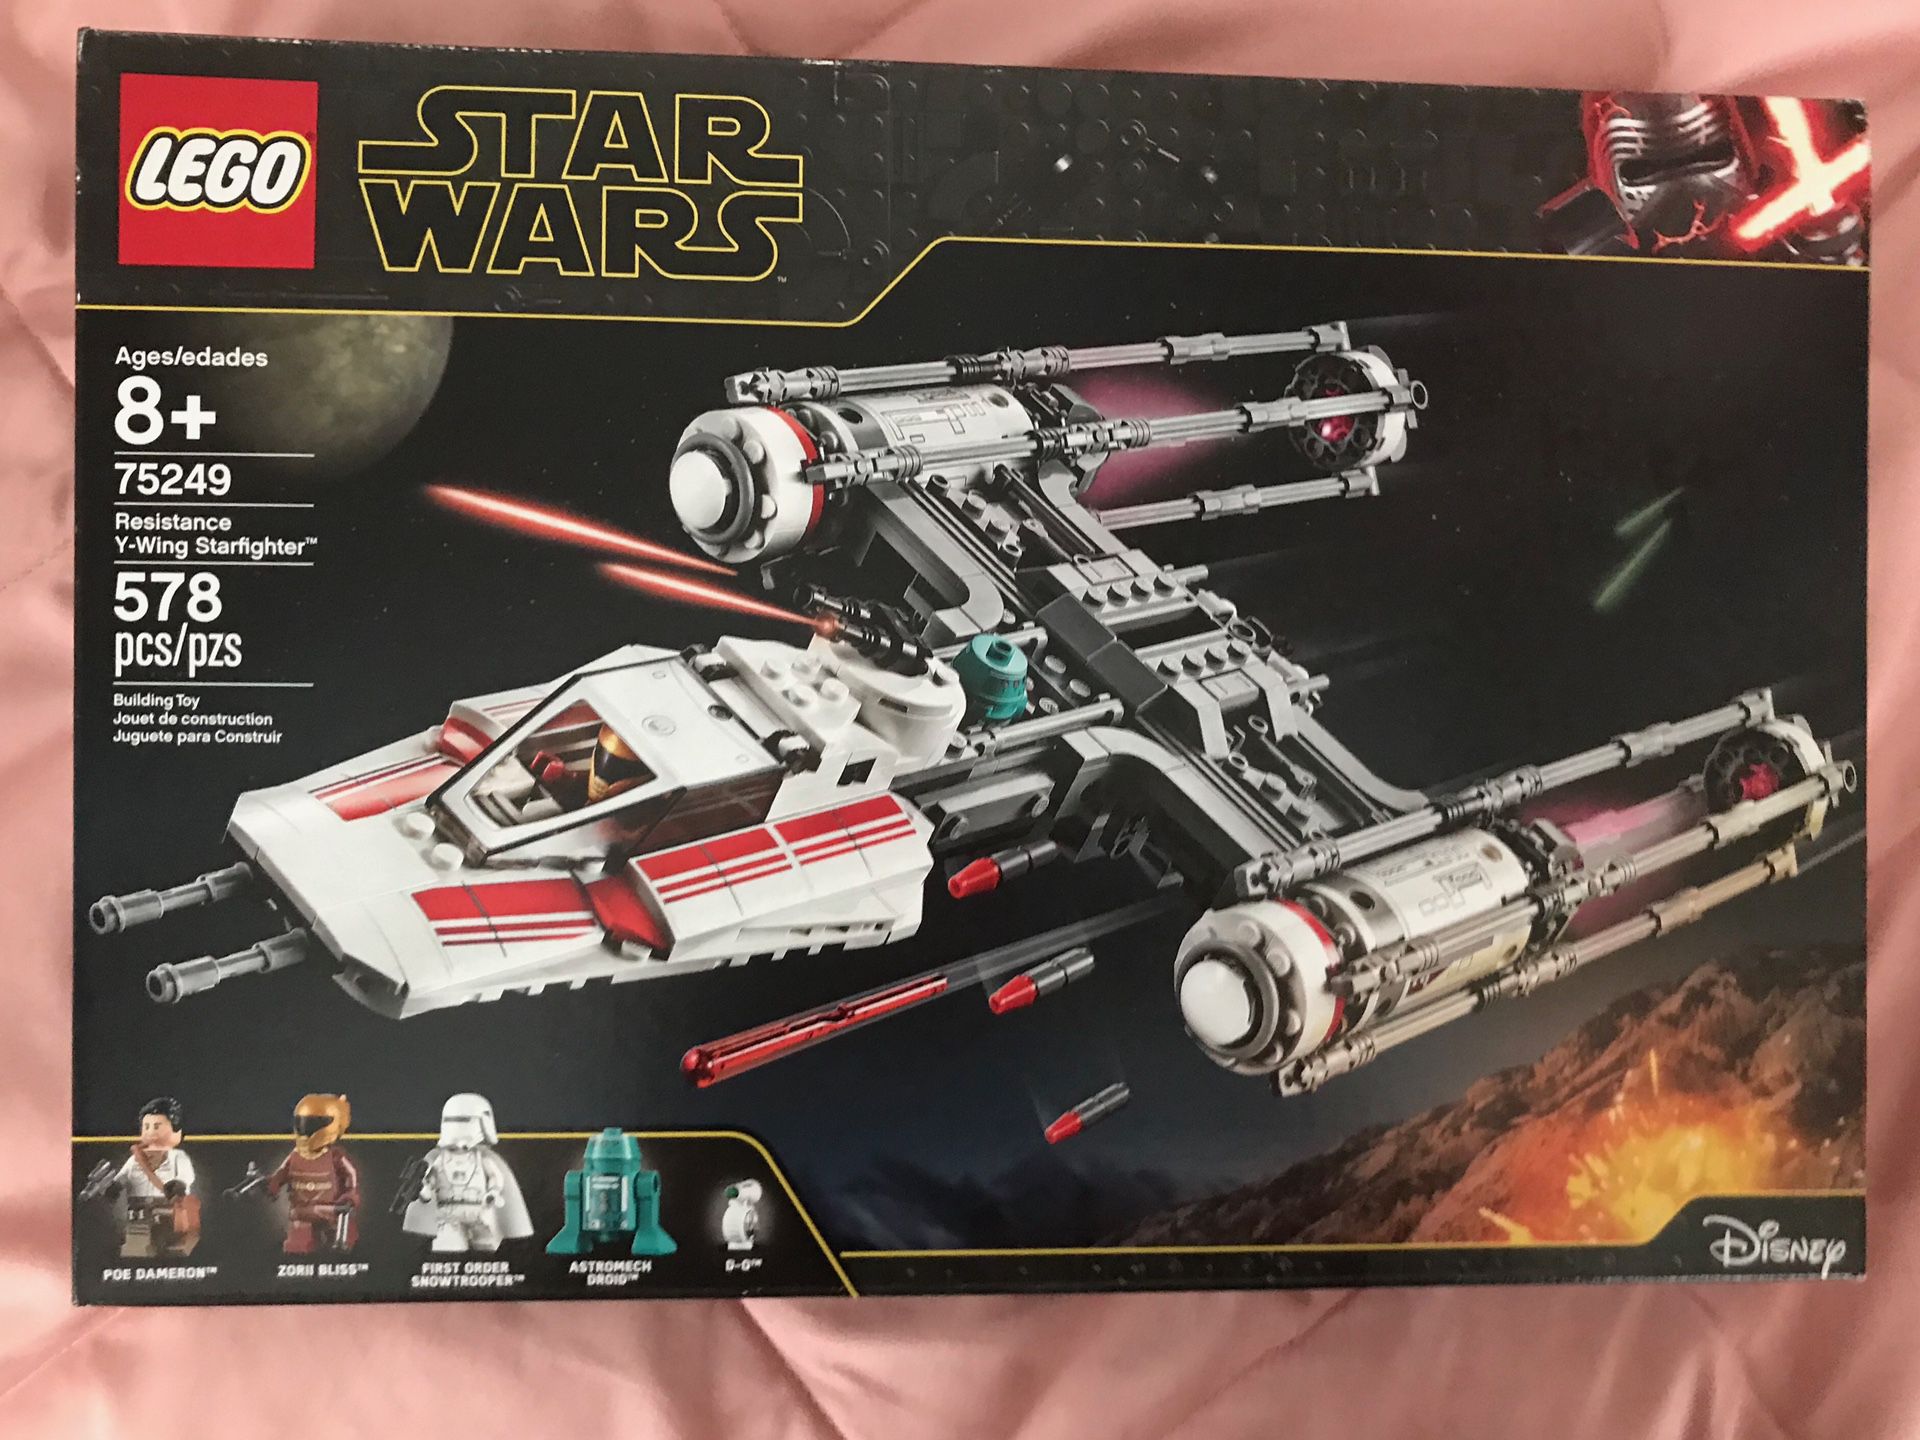 Star Wars LEGO Resistance Y-Wing Starfighter 75249